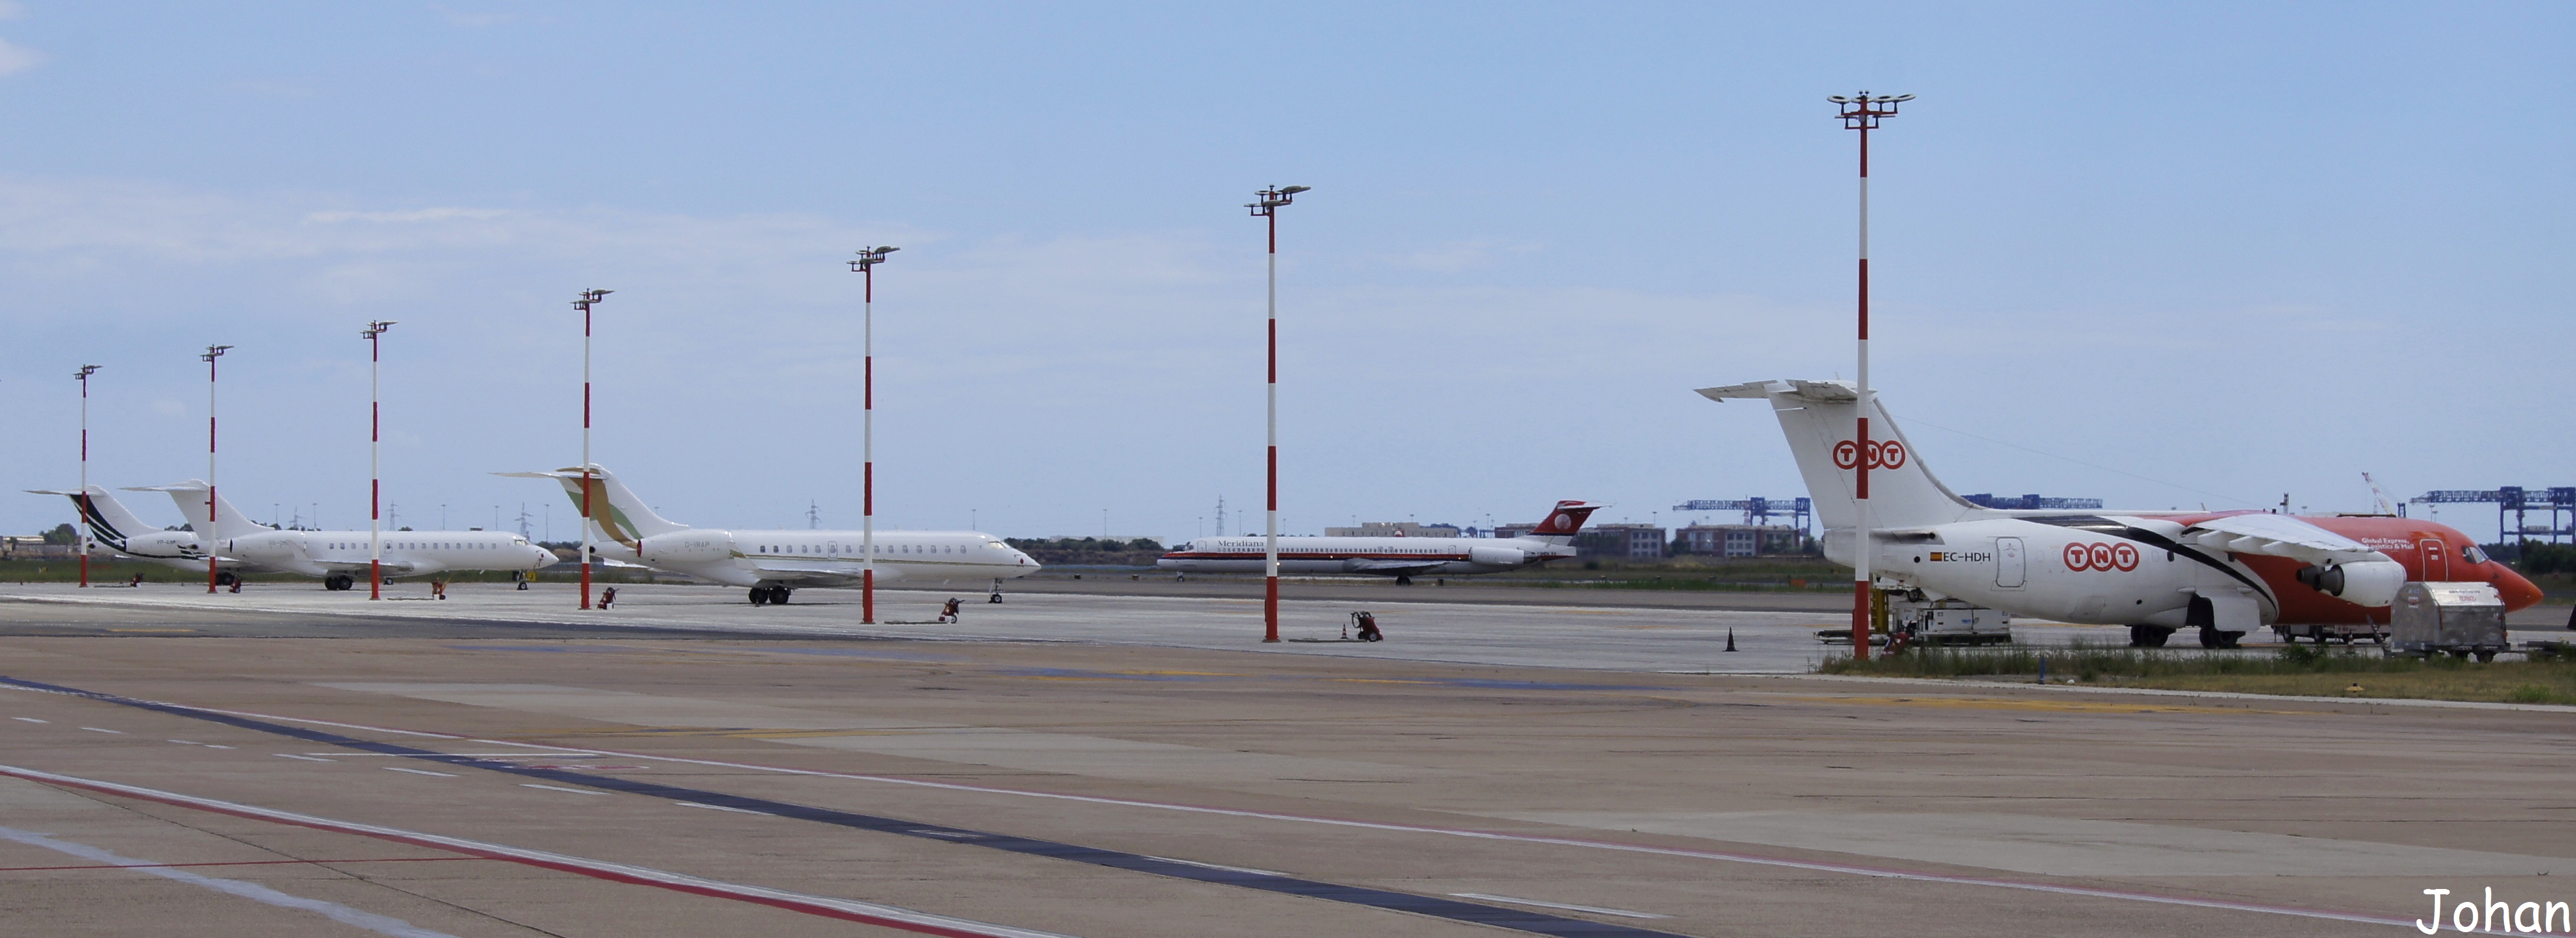 [LIEE/CAG] Cagliari Elmas Airport 2013 Vw4d